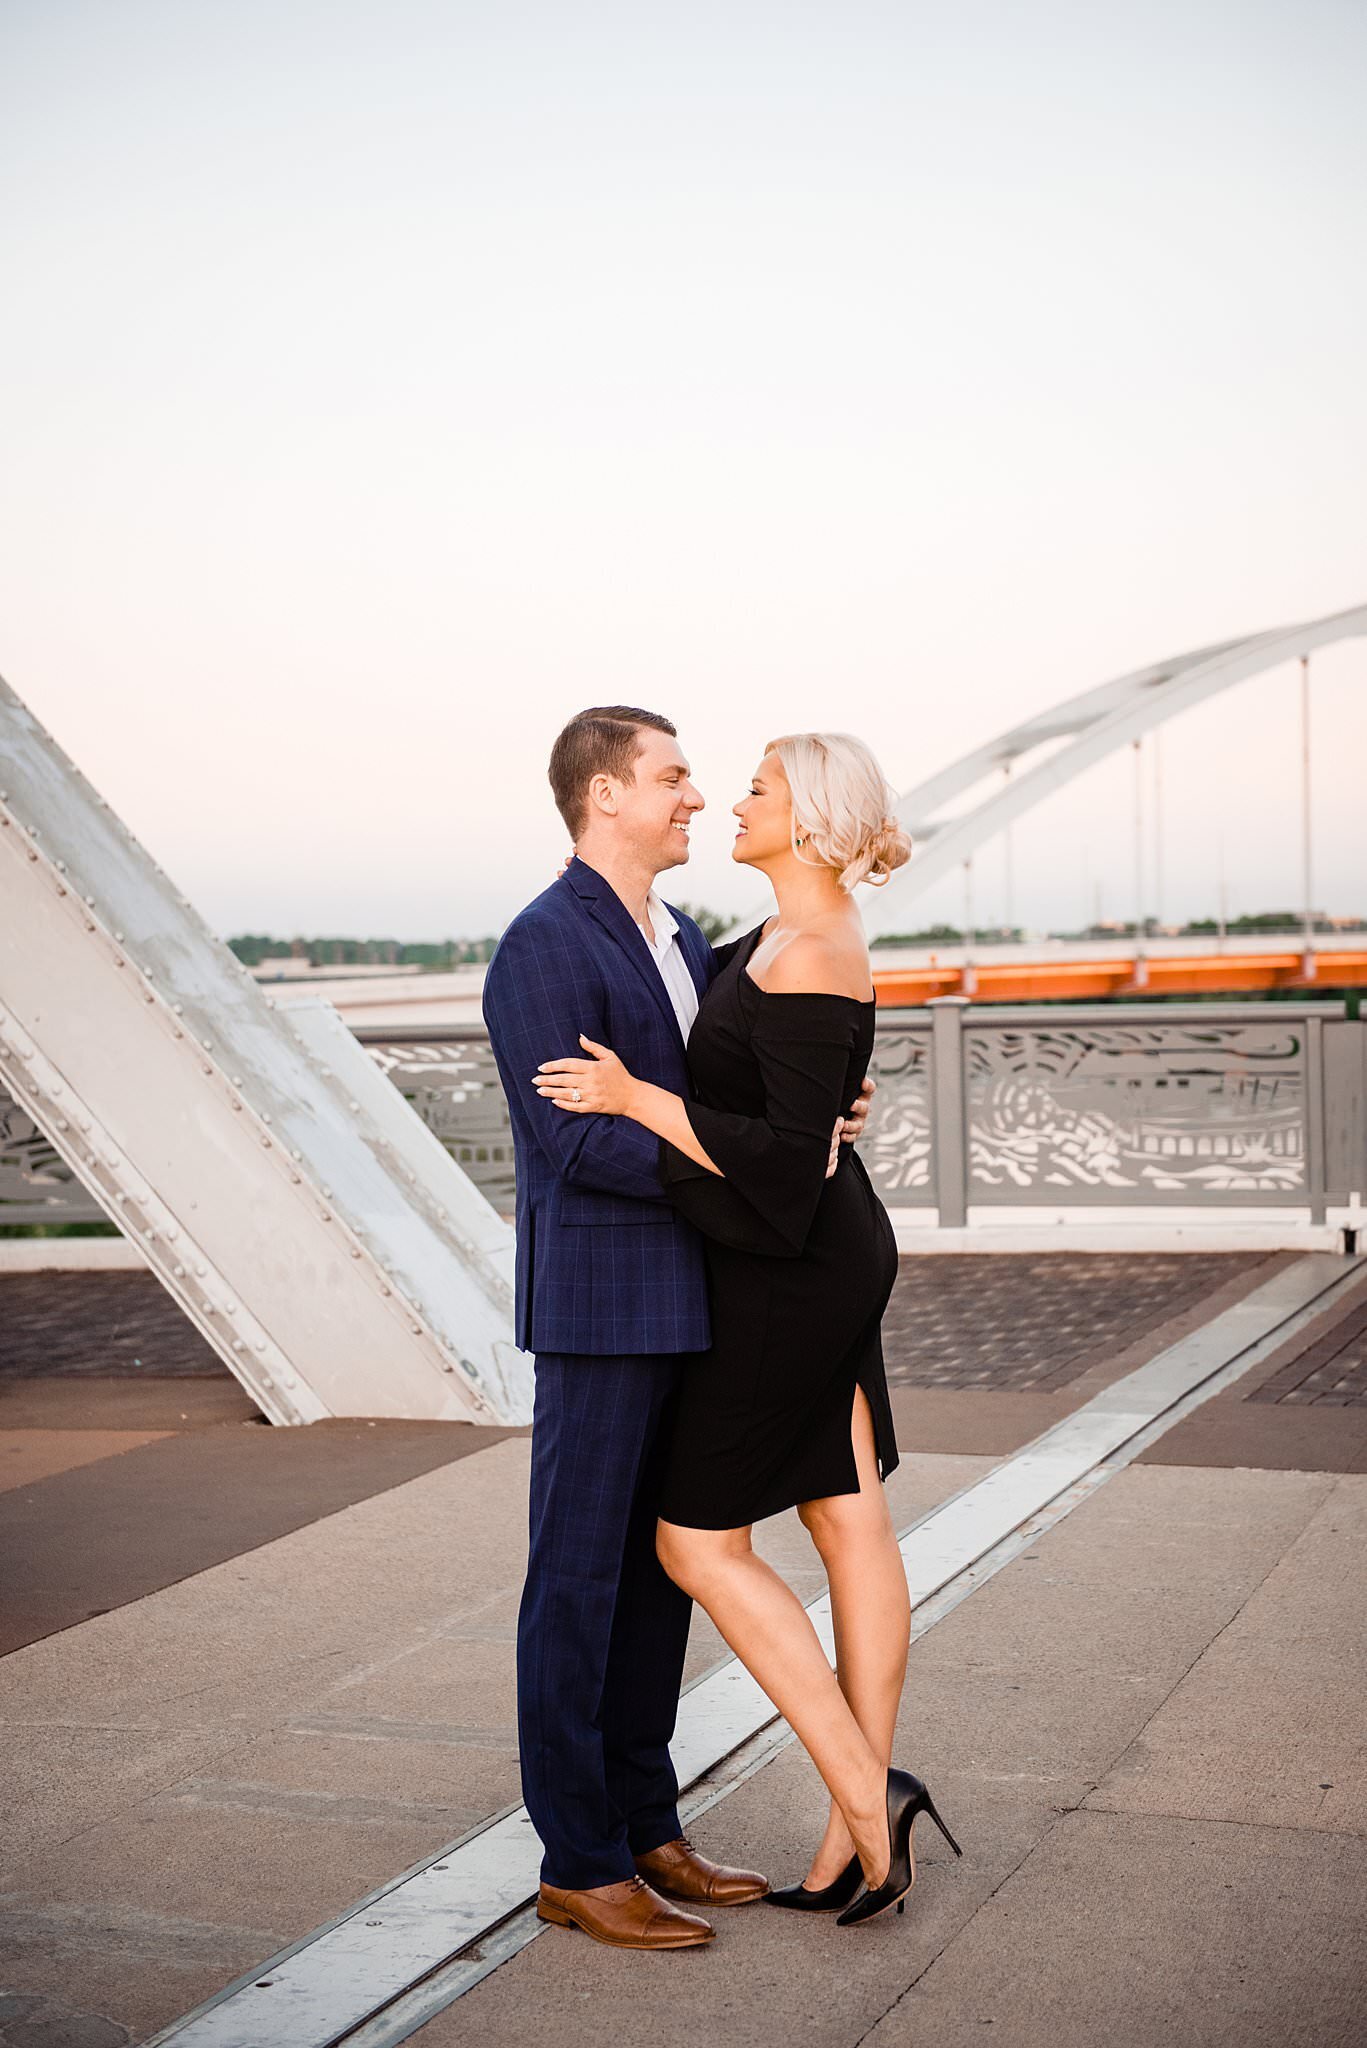 Couple wearing a suit and black dress standing on john schneider bridge